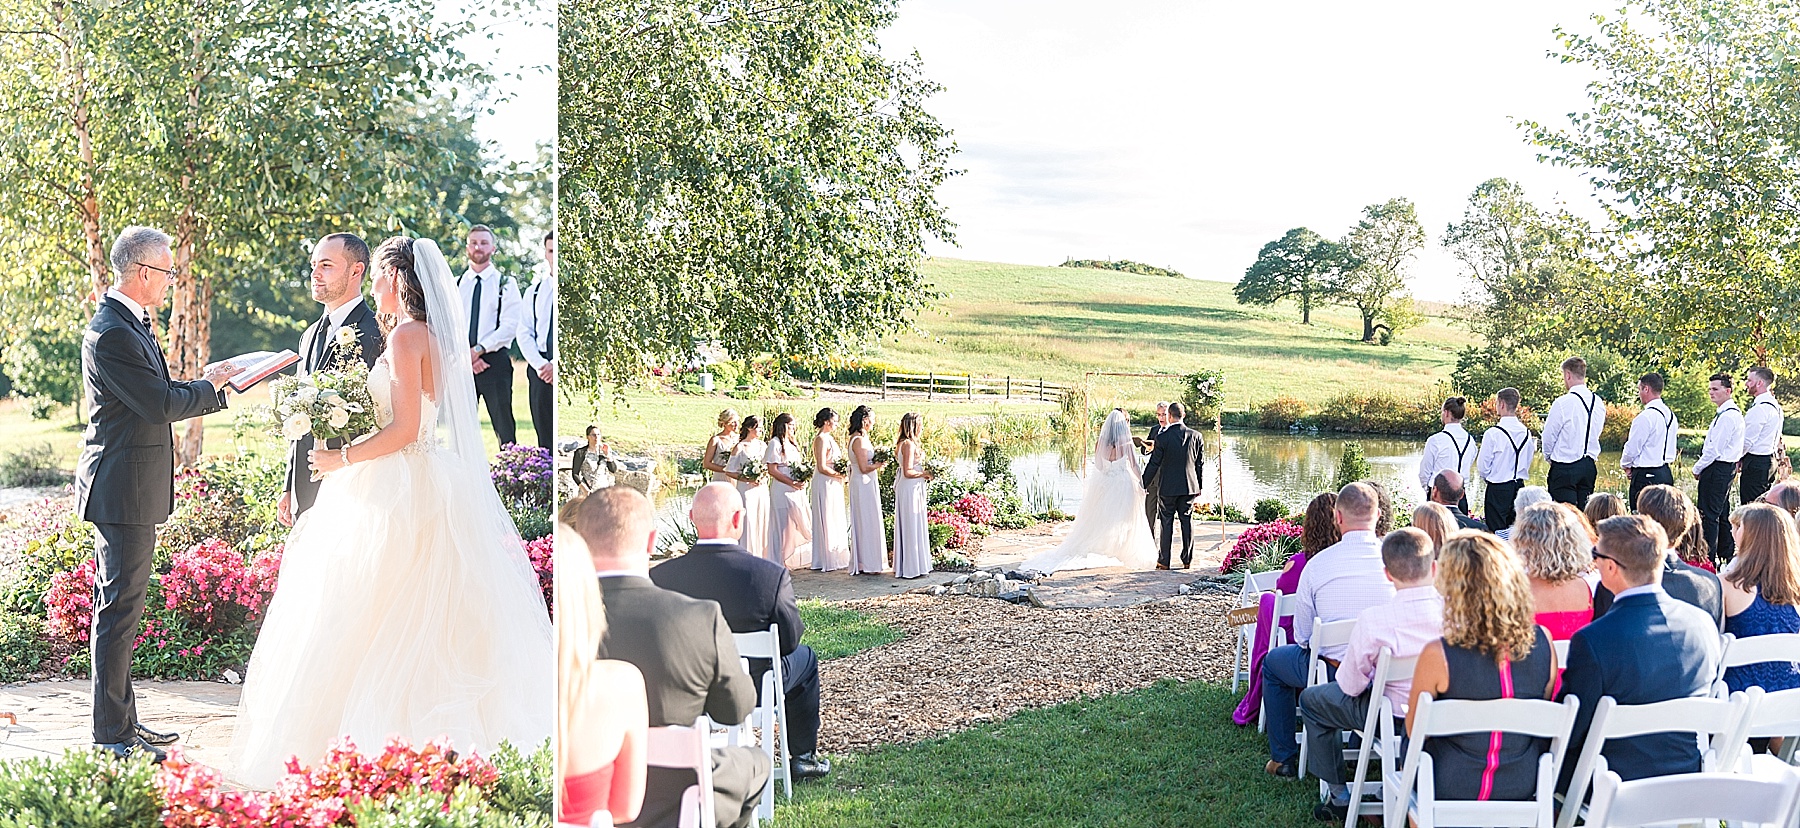 outdoor wedding ceremony photographed by Alexandra Mandato Photography